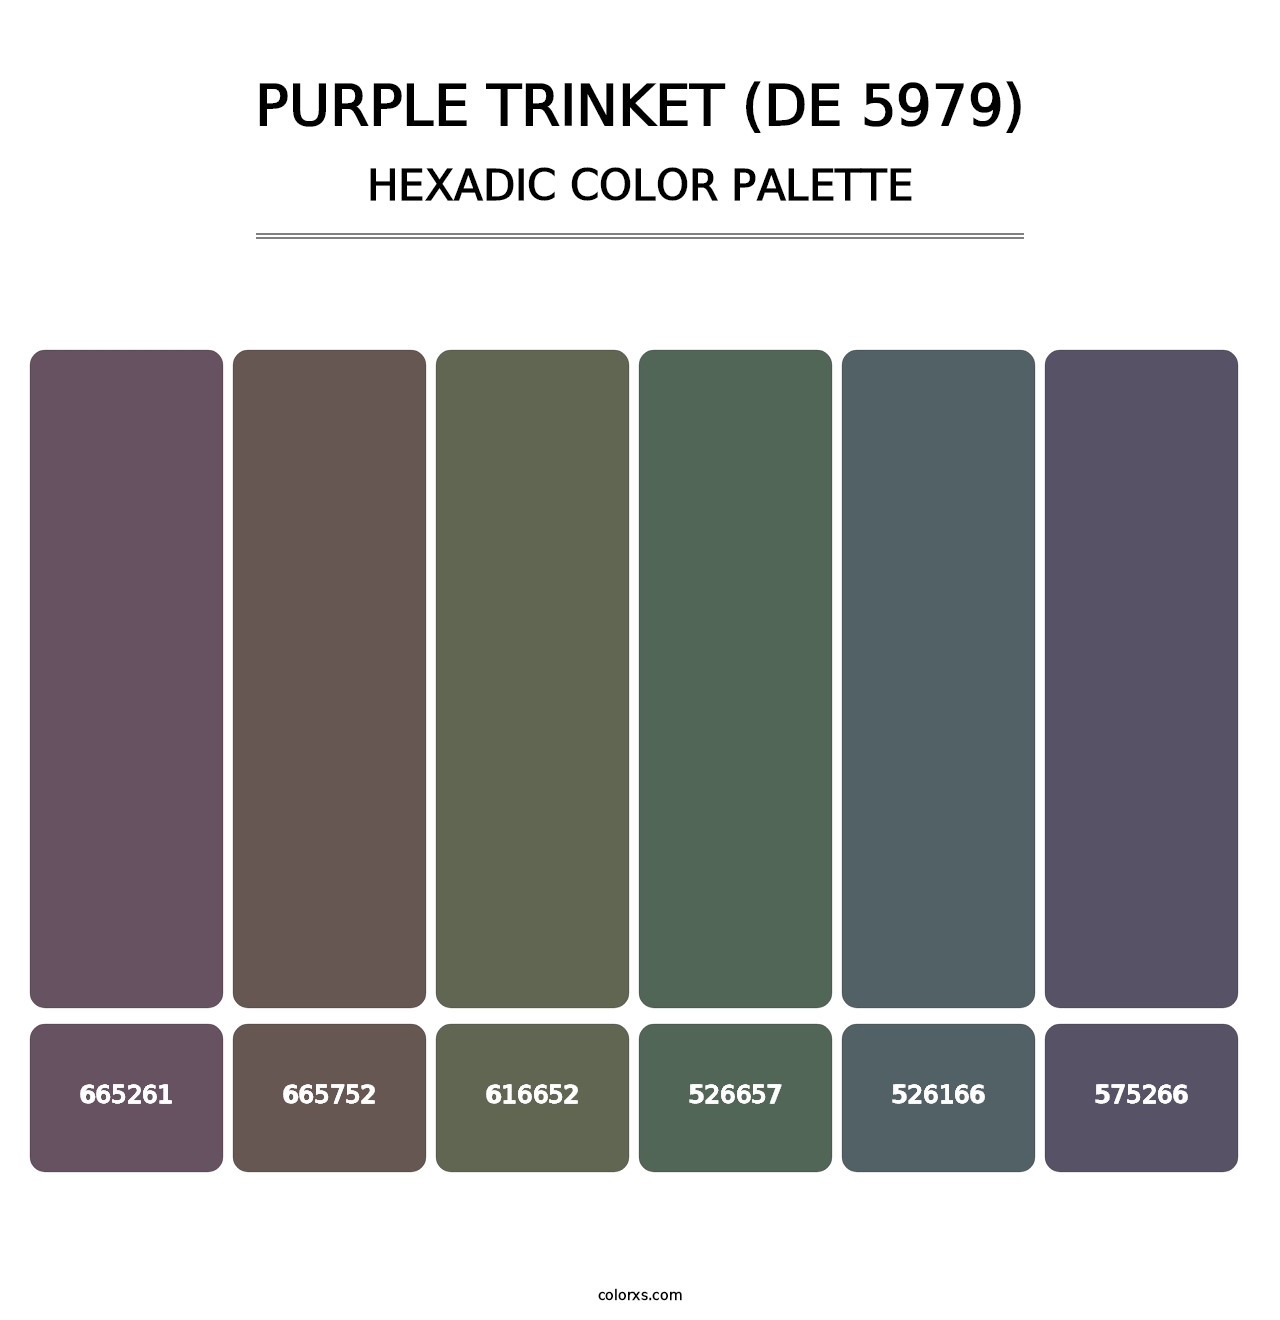 Purple Trinket (DE 5979) - Hexadic Color Palette